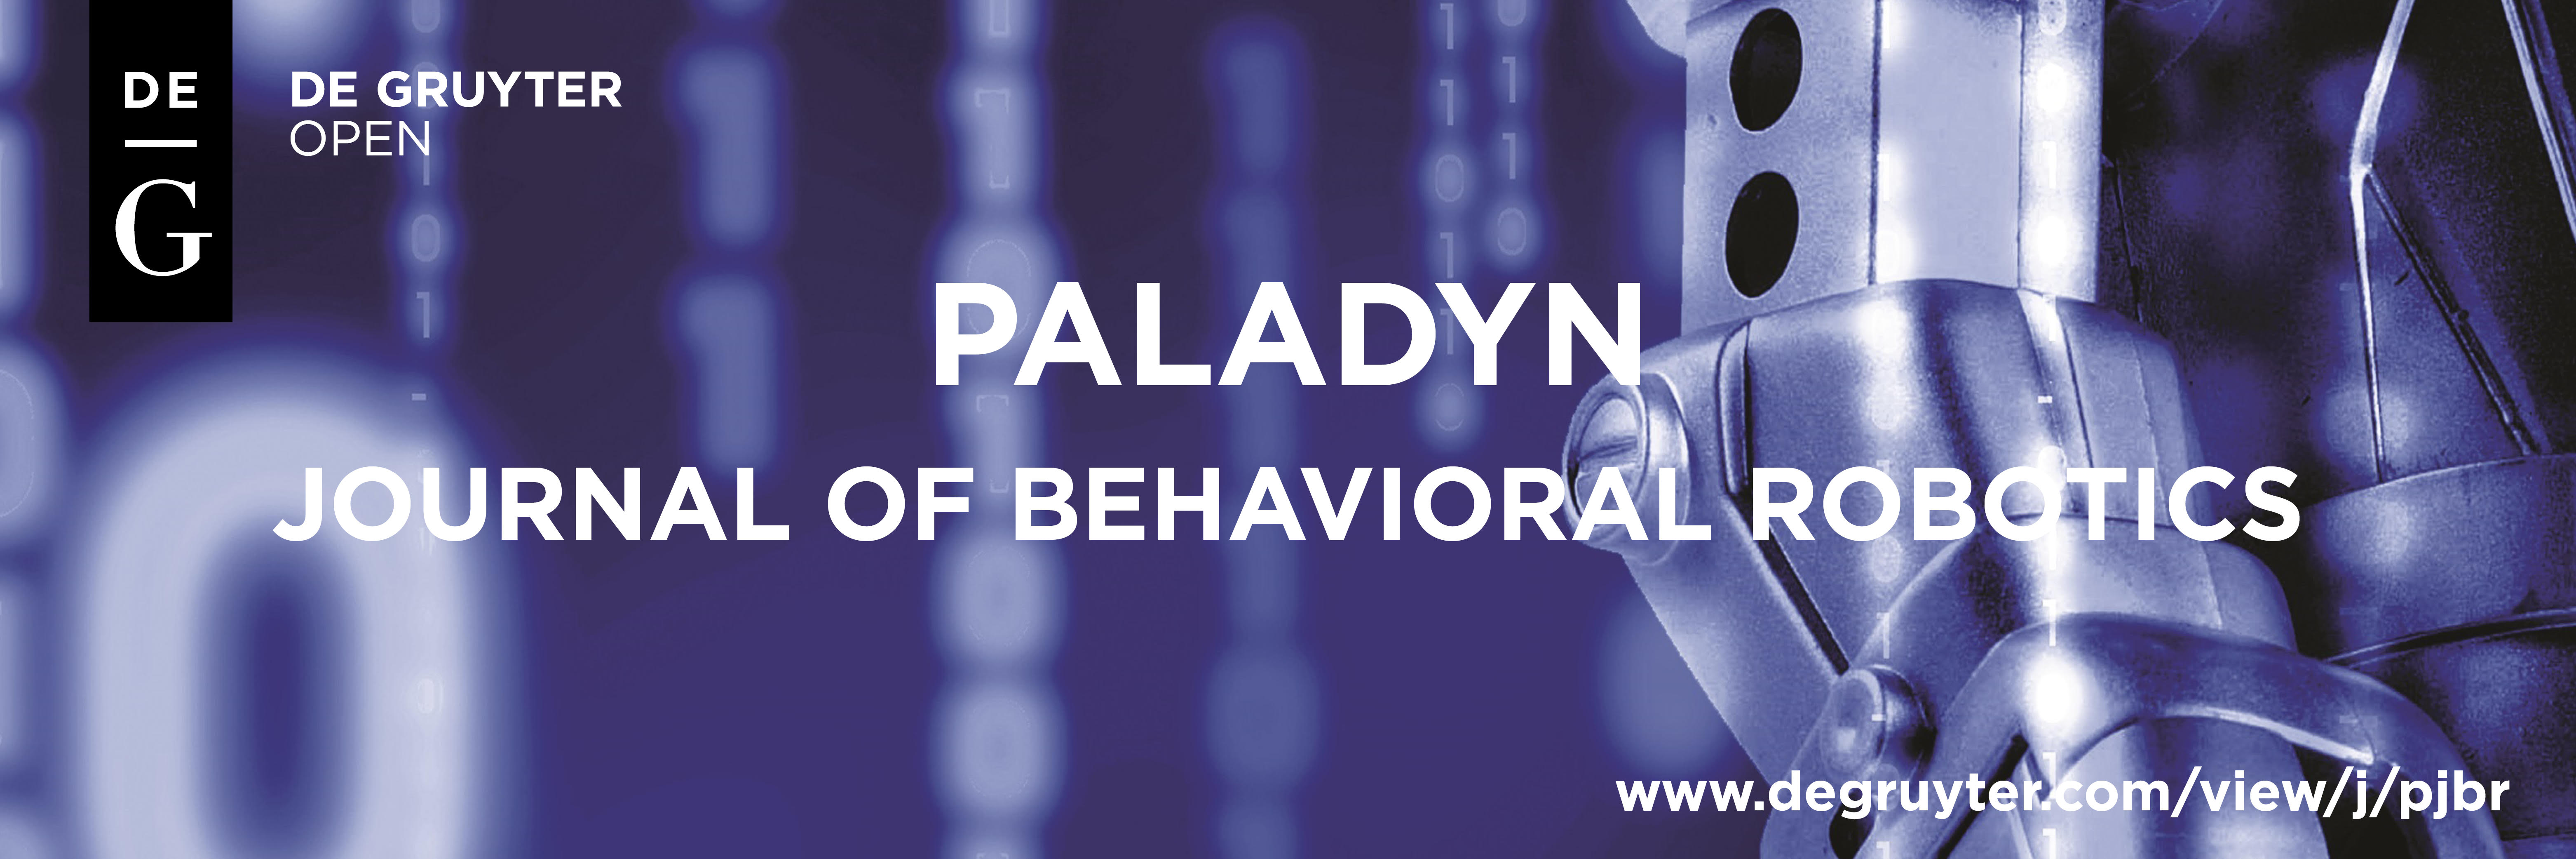 Paladyn Journal of Behavioral Robotics